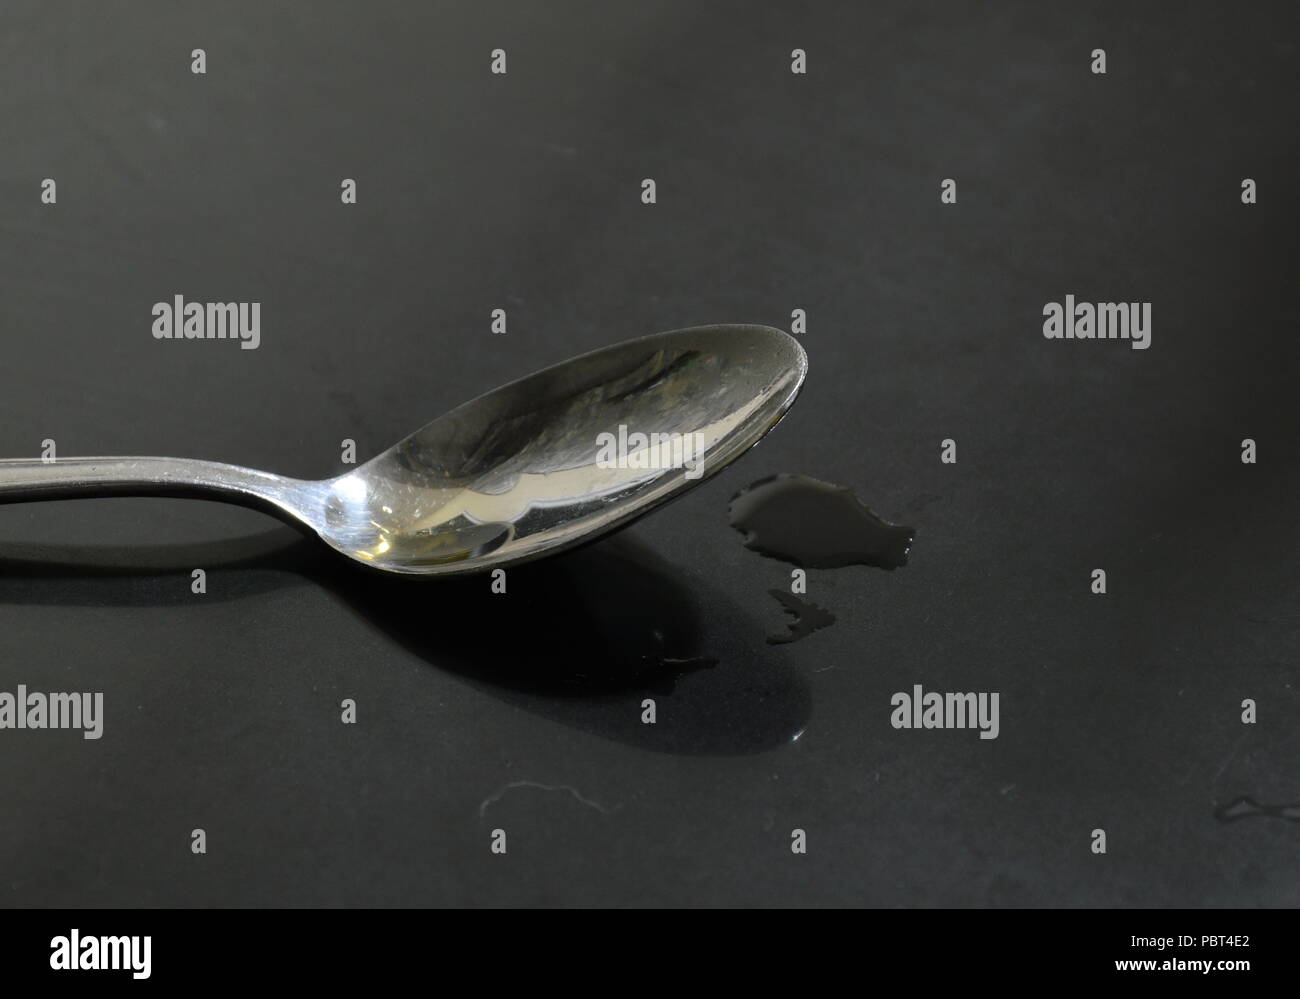 tea spoon on black counter Stock Photo